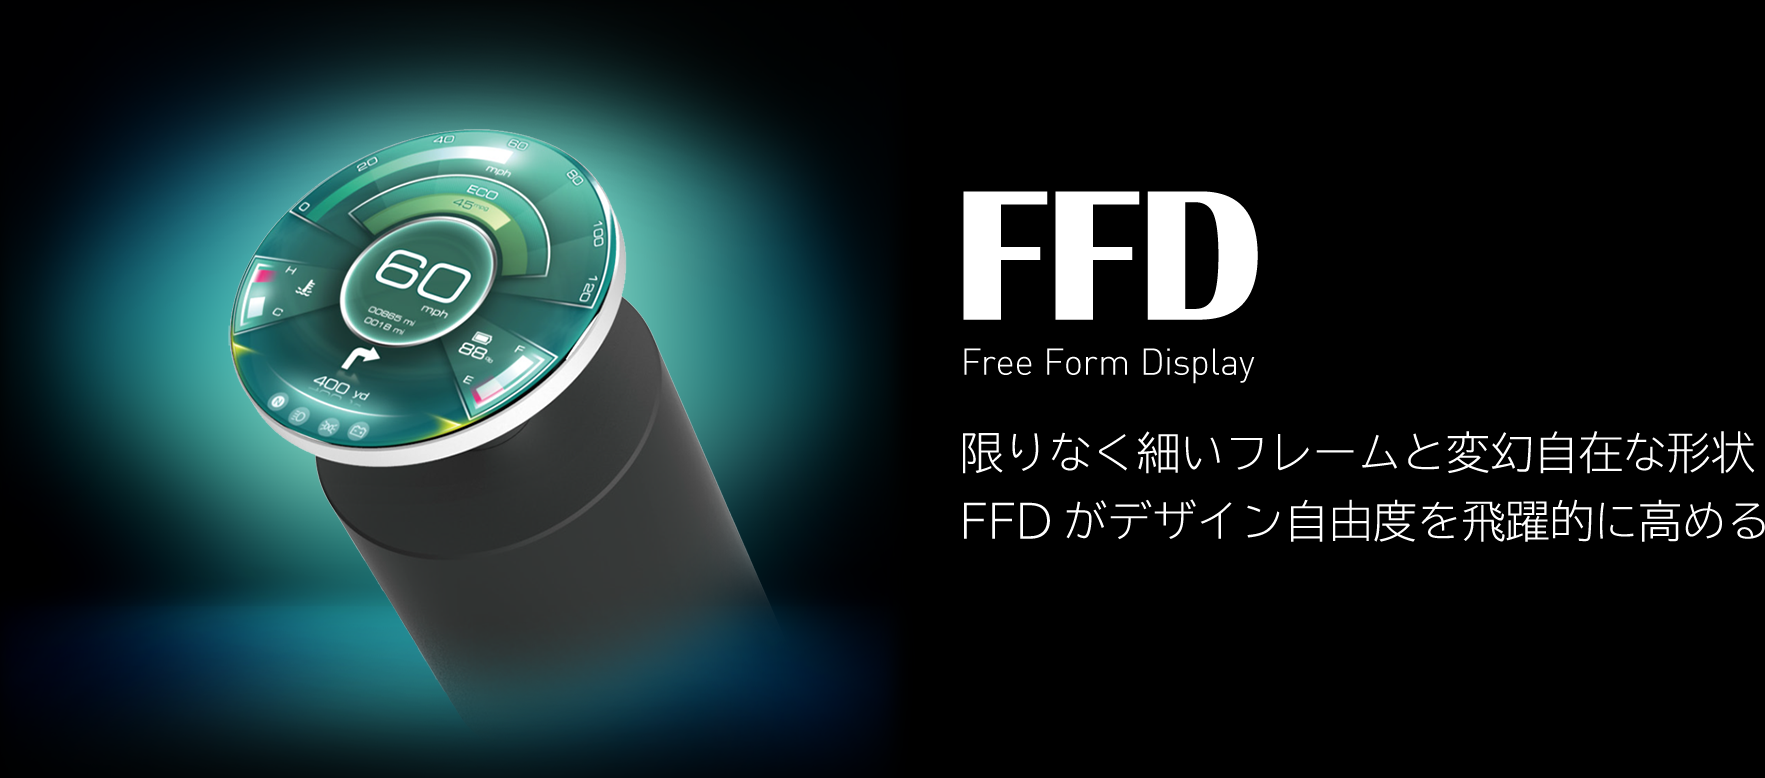 FFD - Free Form Display